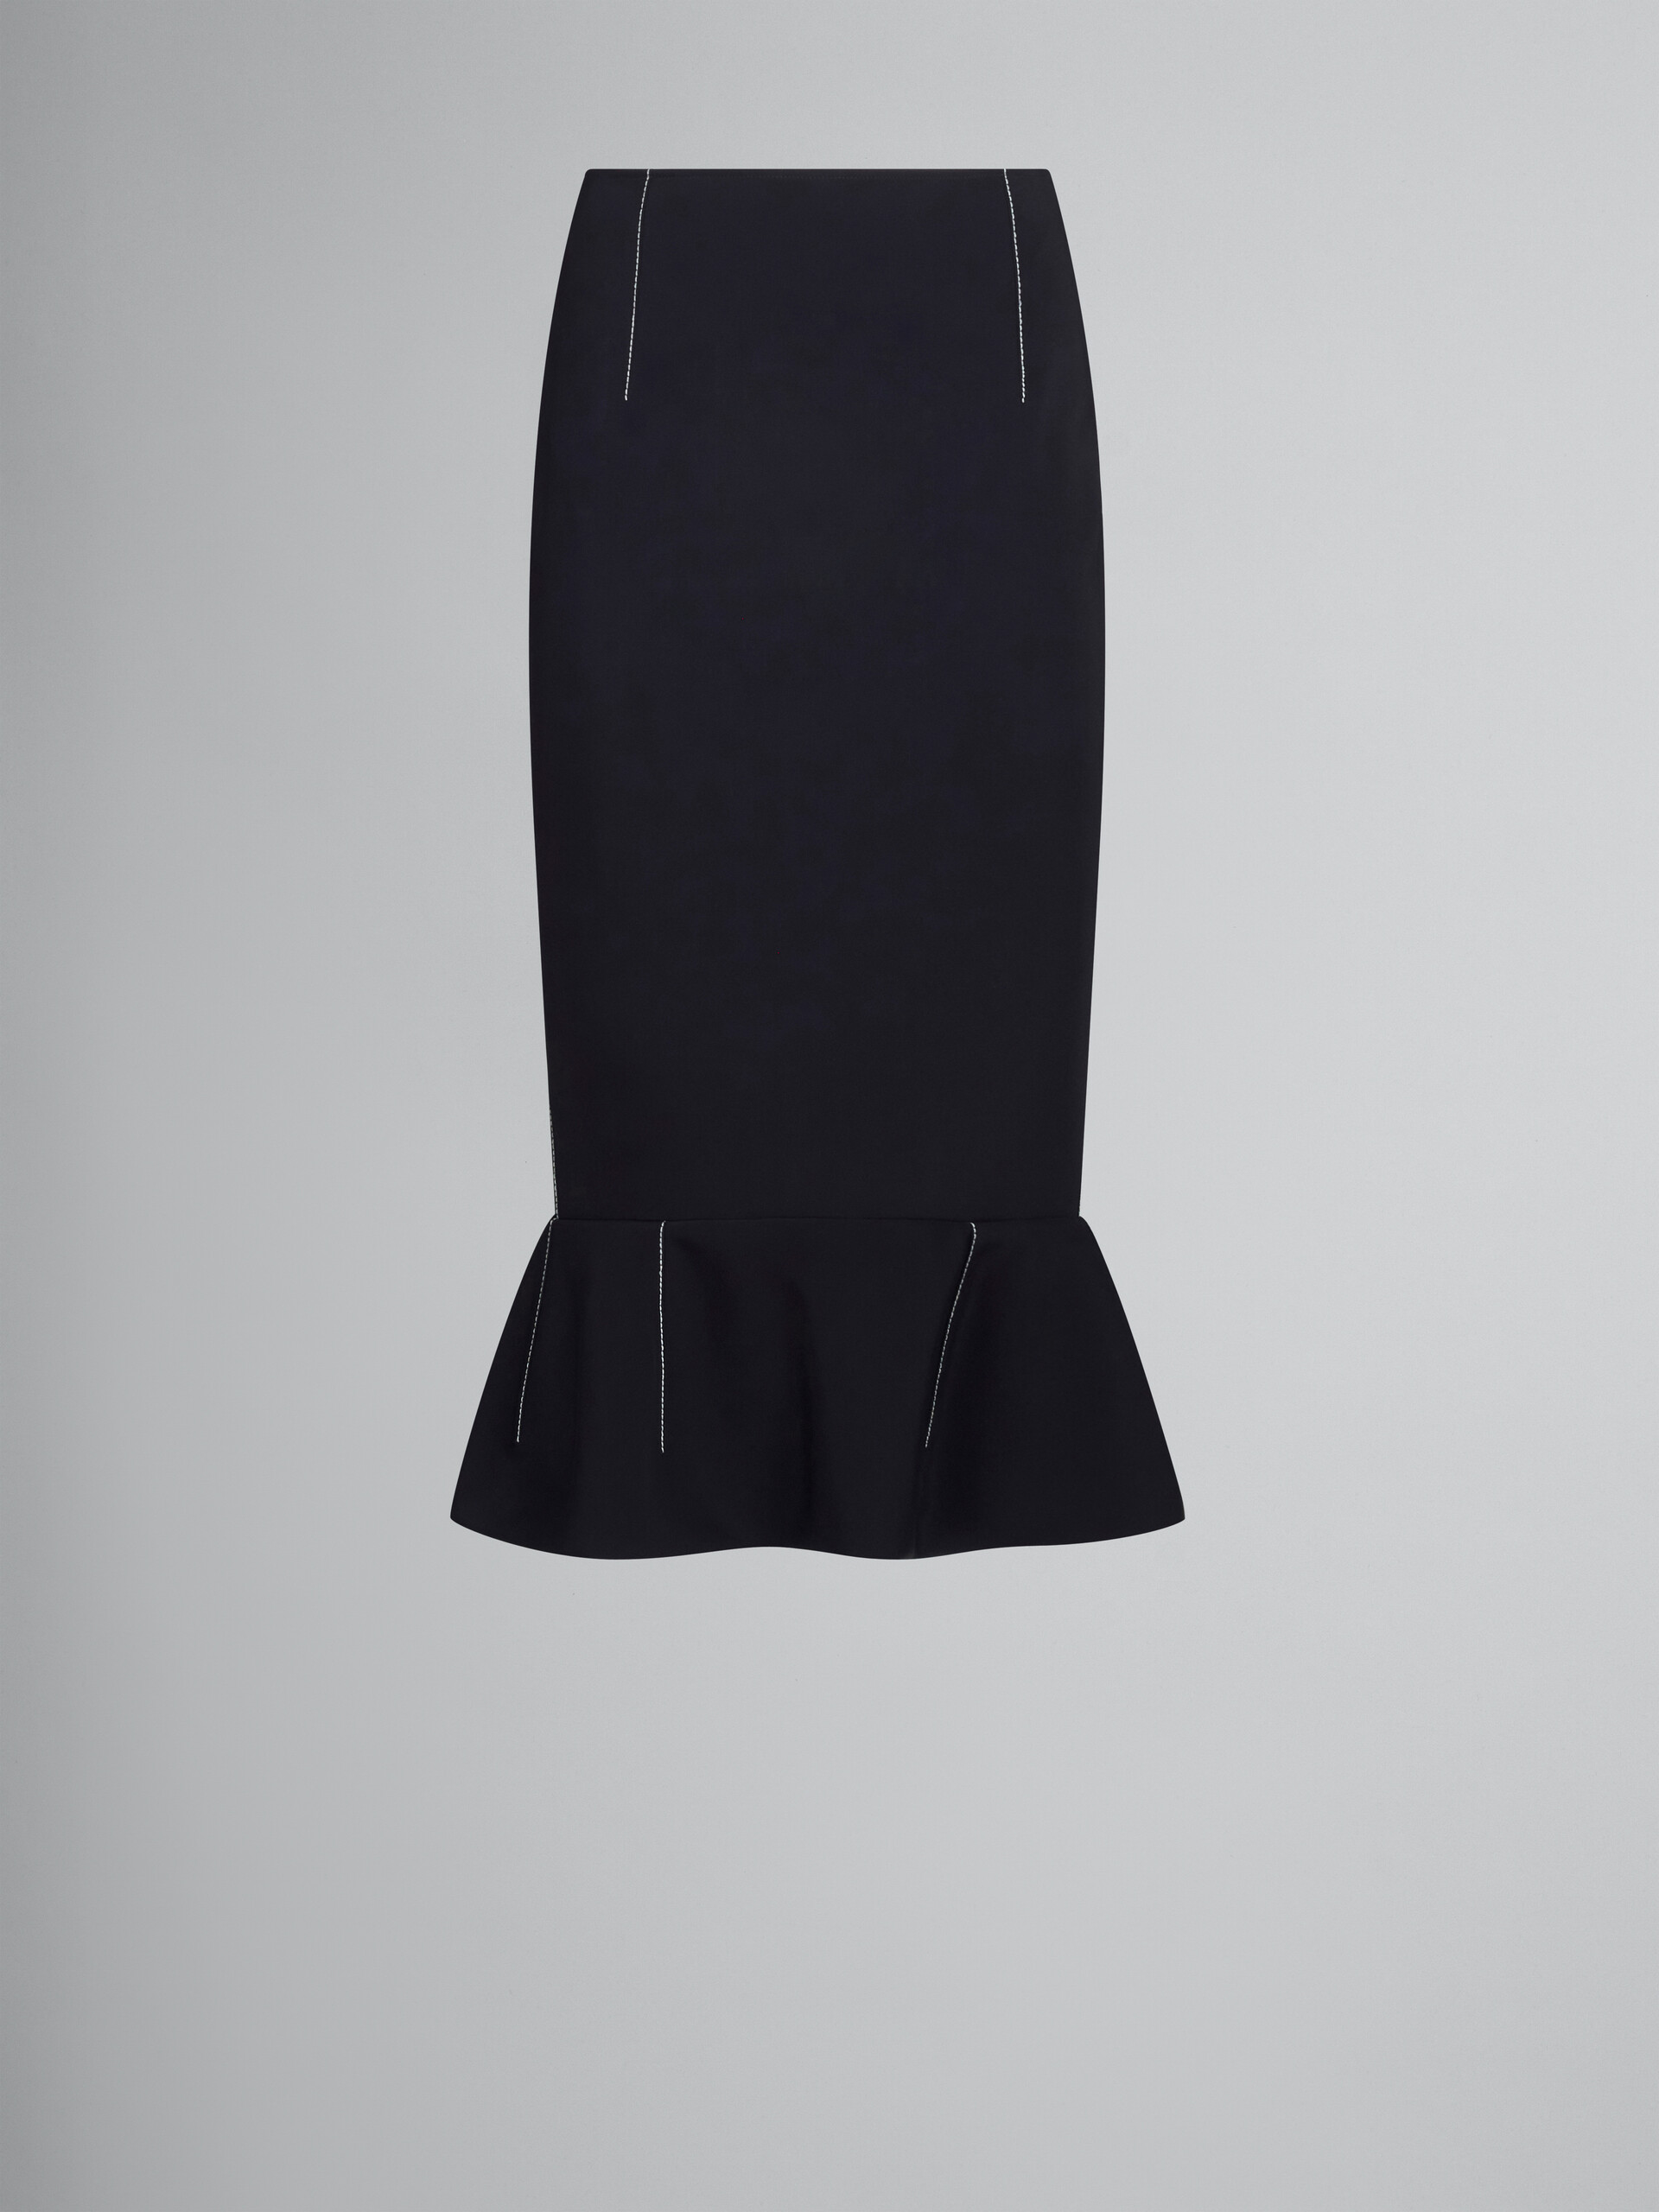 Black cady sheath skirt with flounce hem - Skirts - Image 1